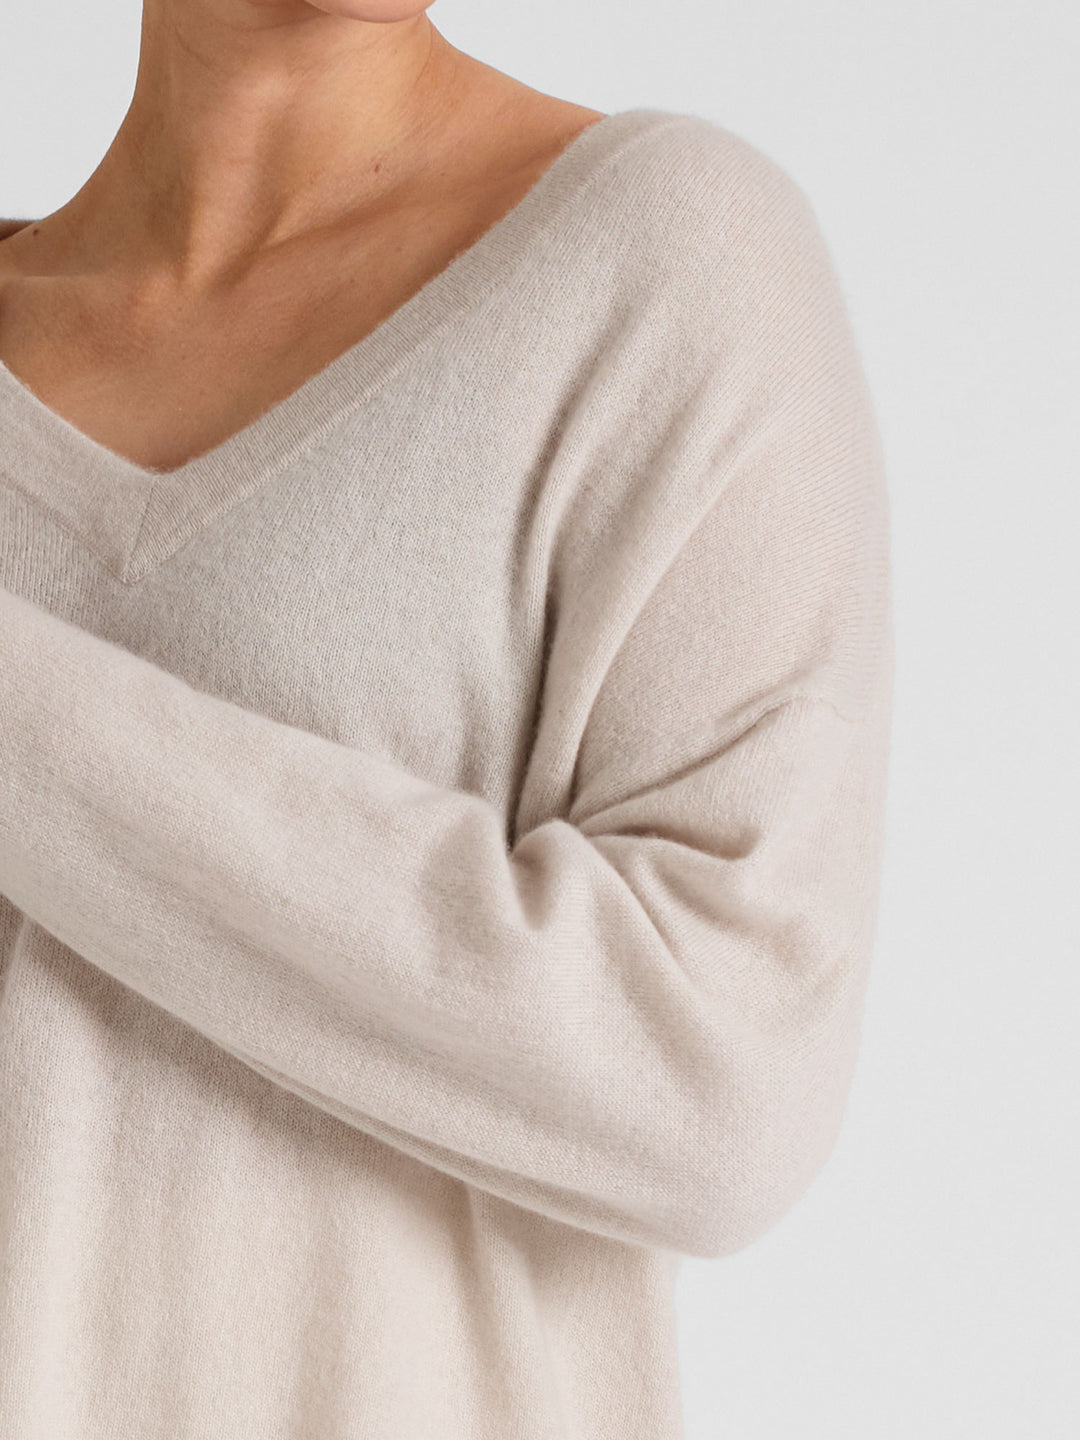 Cashmere sweater "Alva" in 100% pure cashmere. Scandinavian design by Kashmina. Color: Pearl.